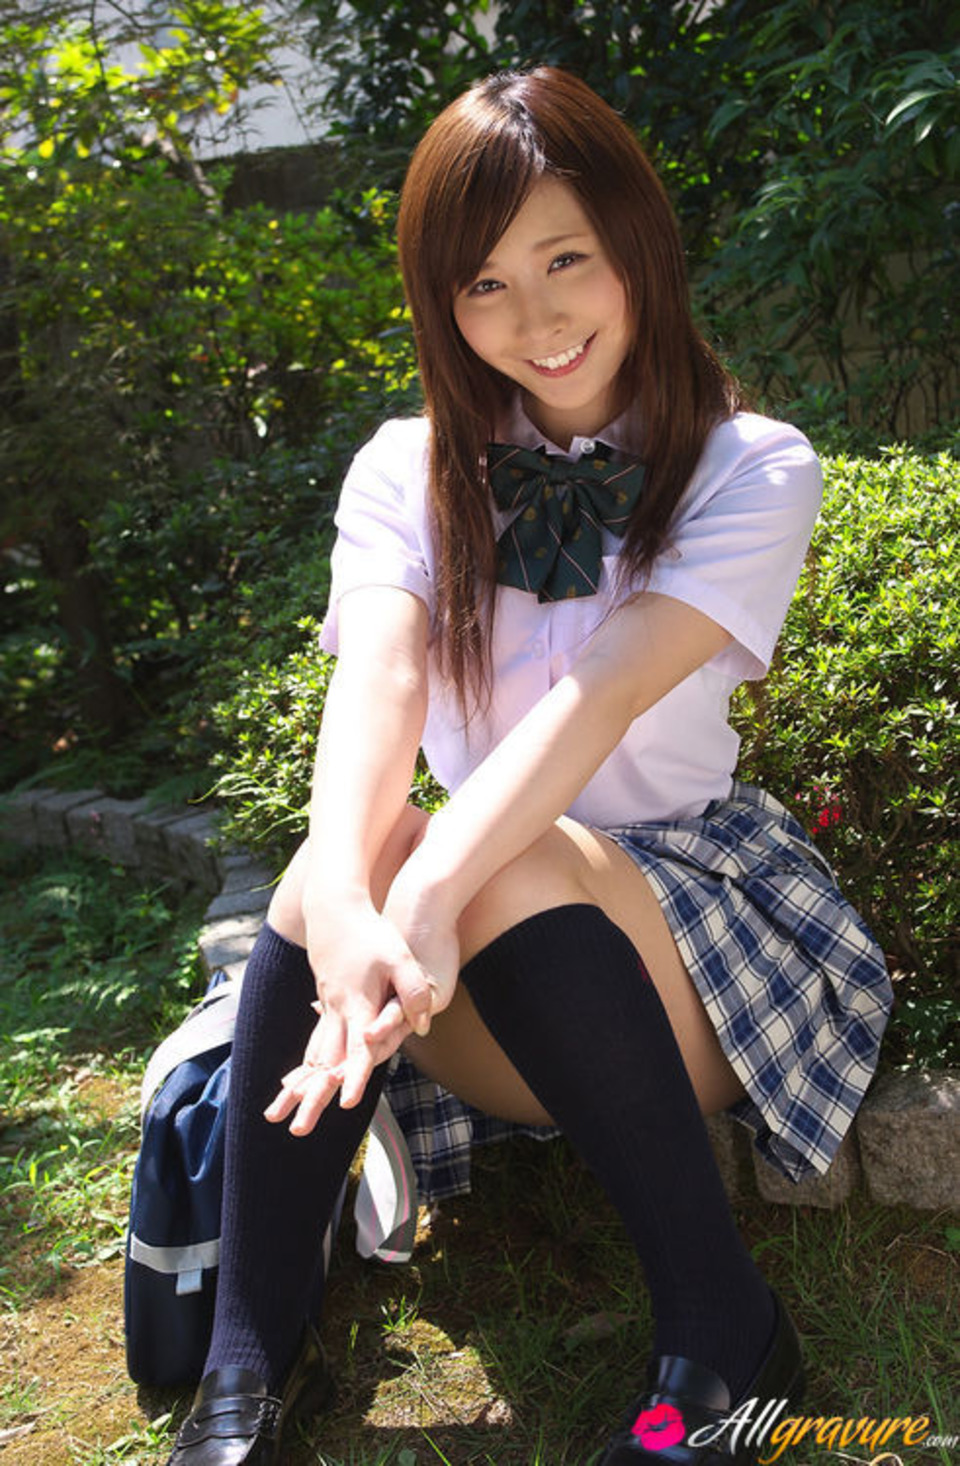 Iyo Hanaki cute gravure schoolgirl - Teens In Asia